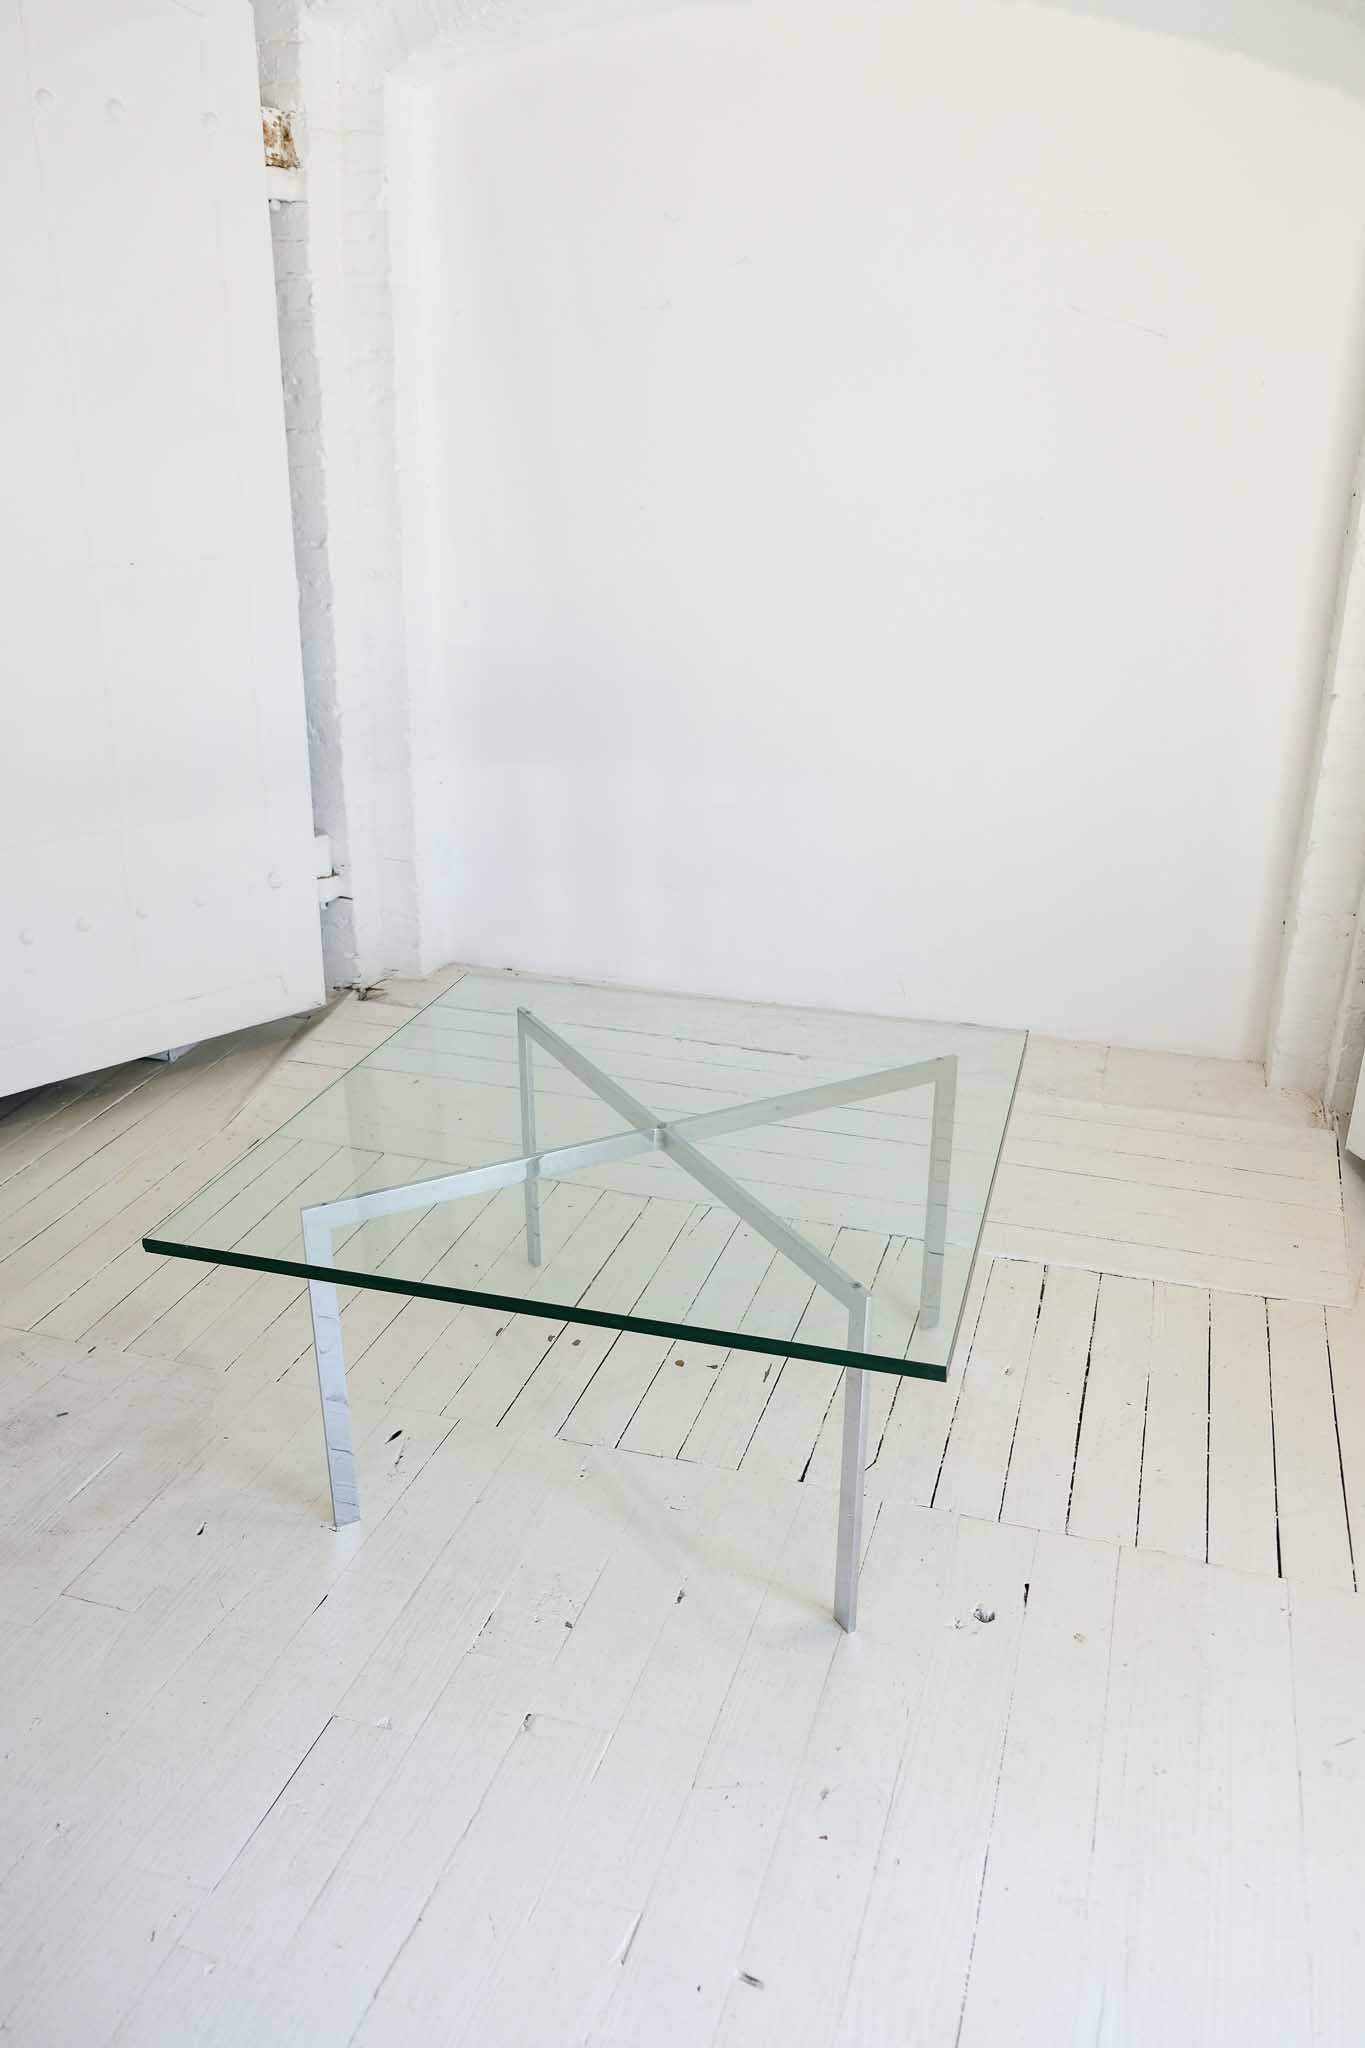 Knoll Barcelona Table Glass Table